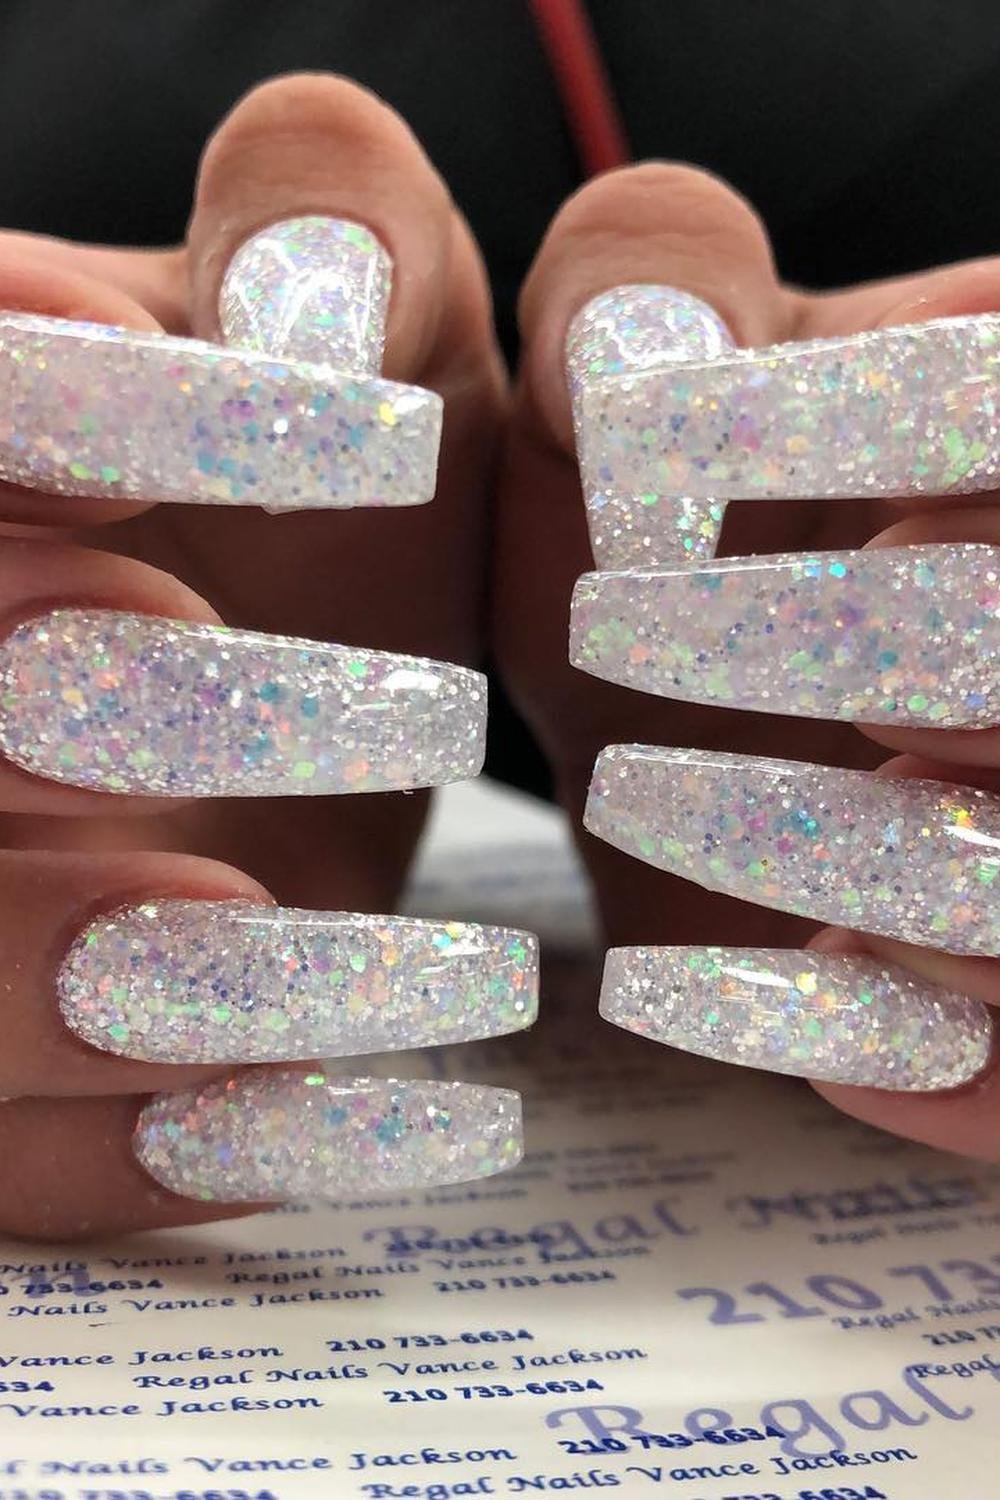 21 - Picture of White Glitter Nails